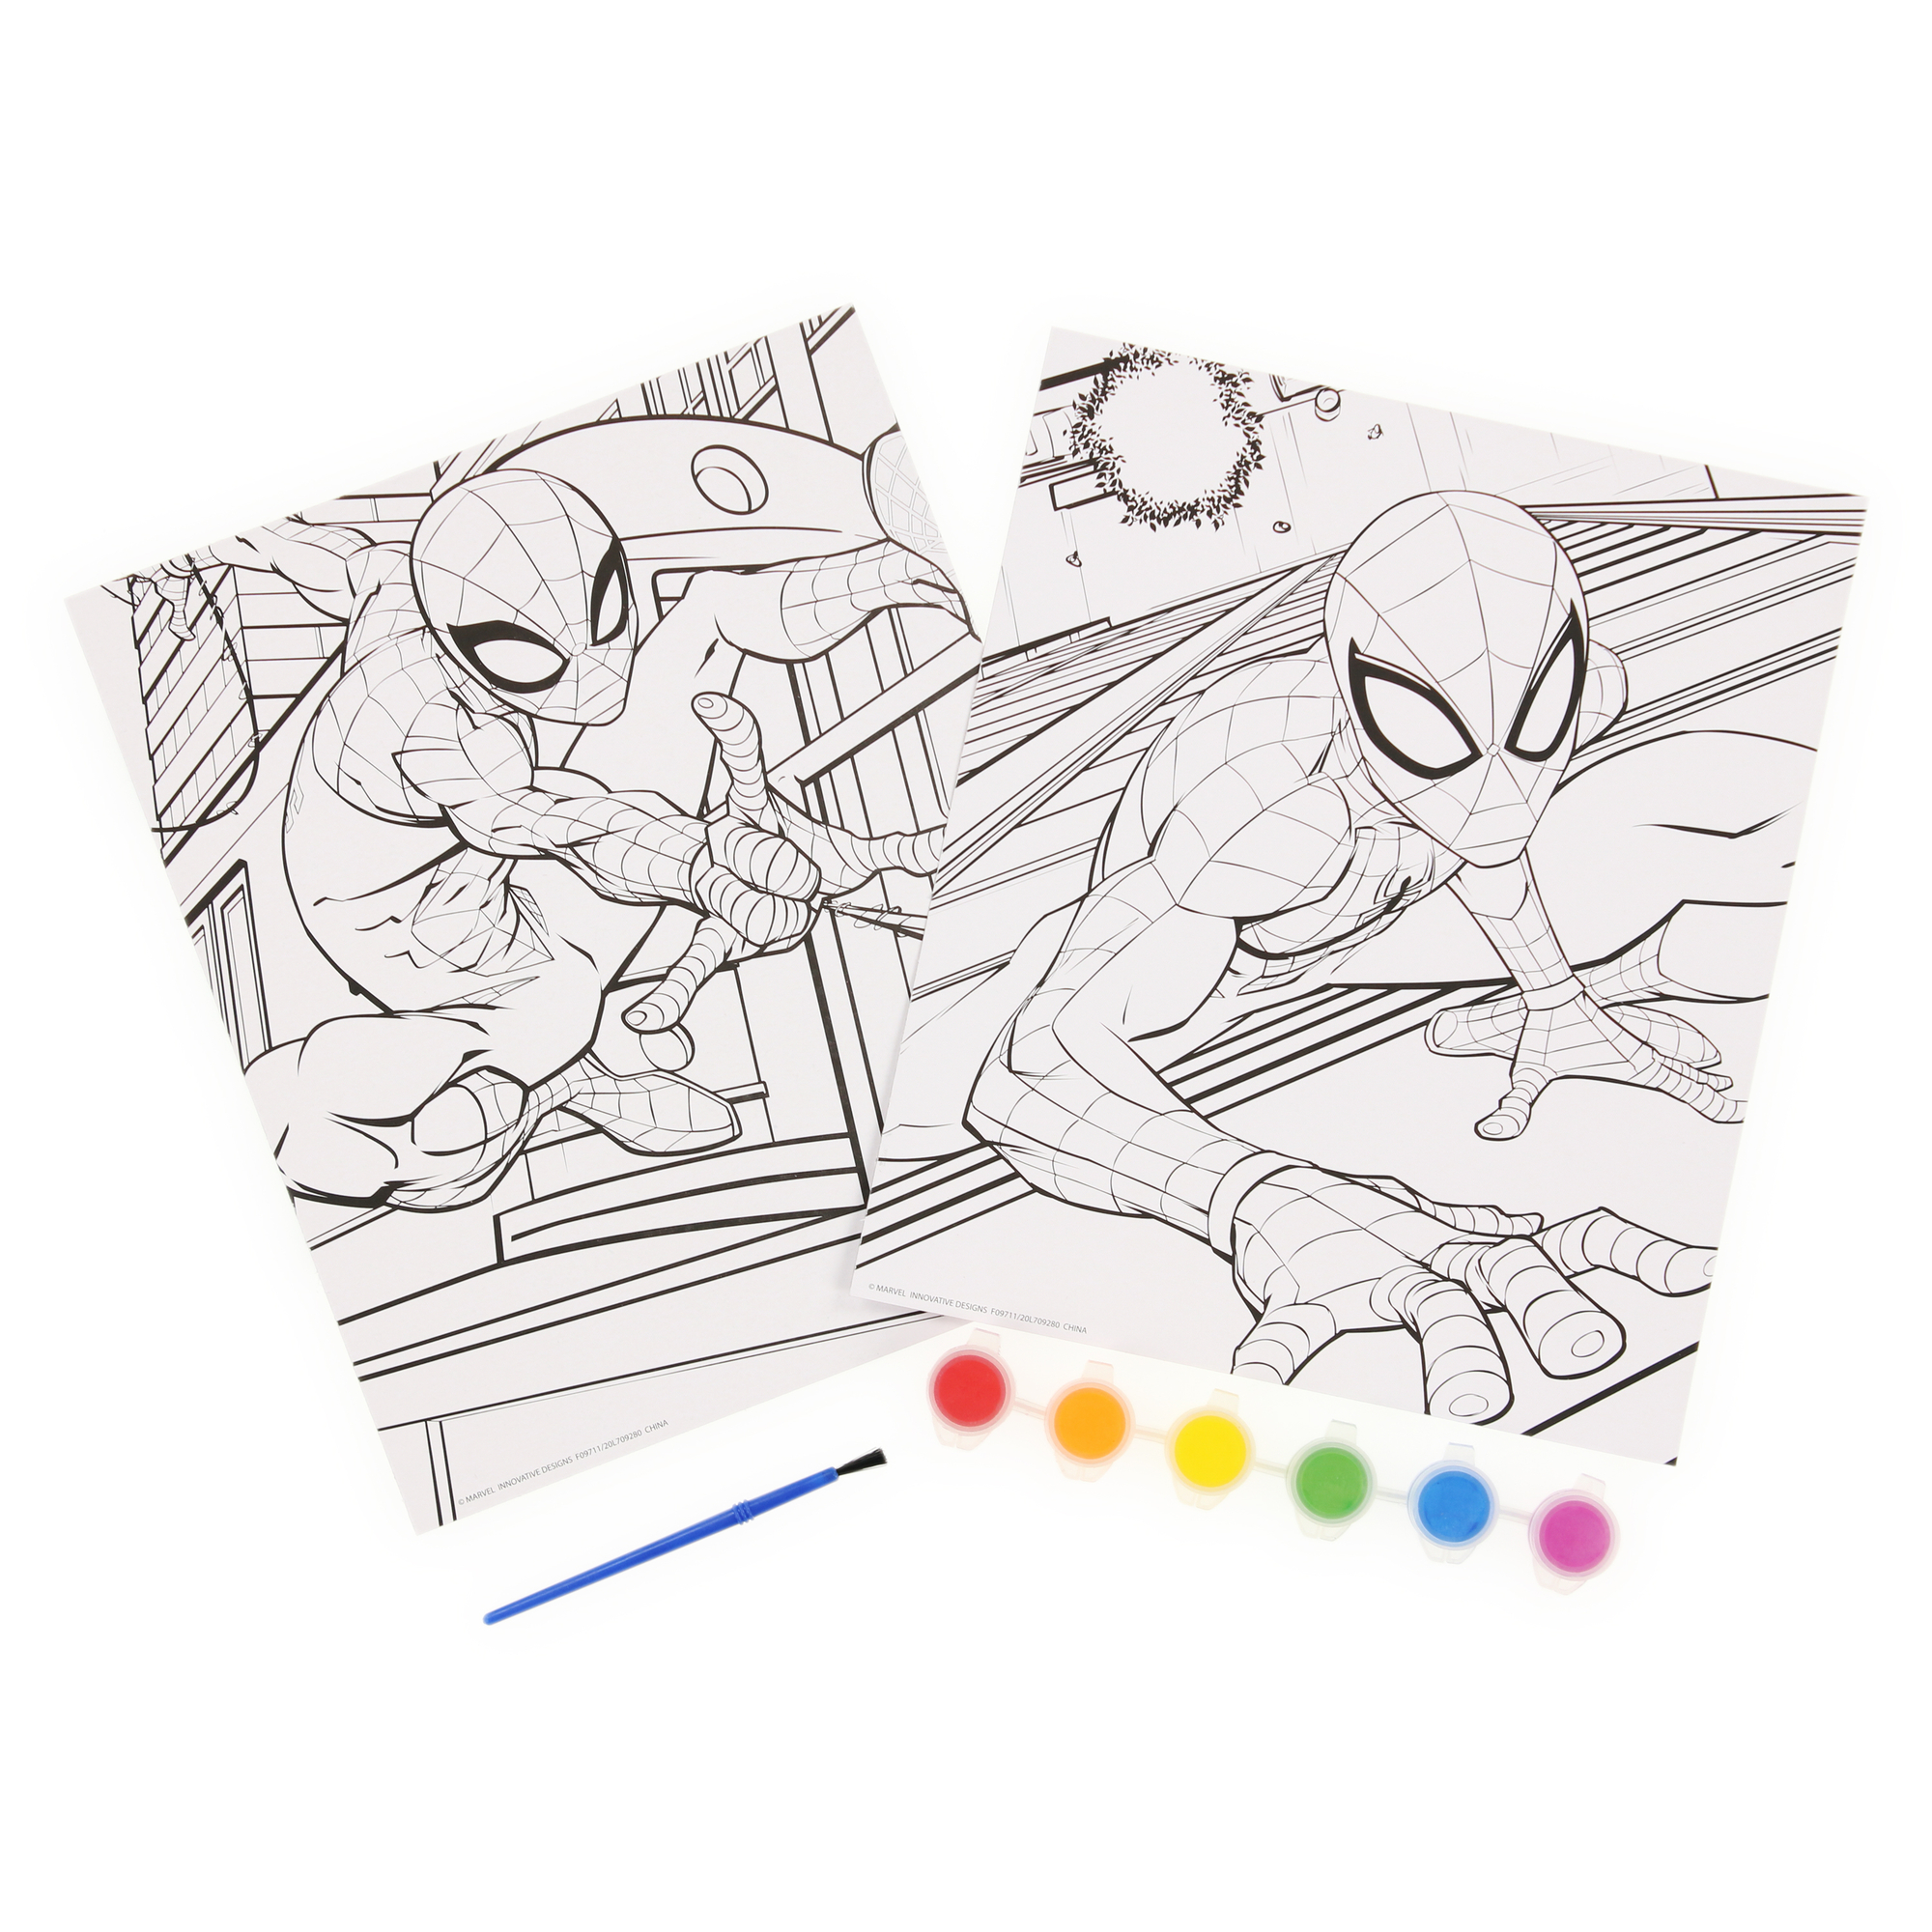 Marvel® Spider-Man™ Coloring Paint Set